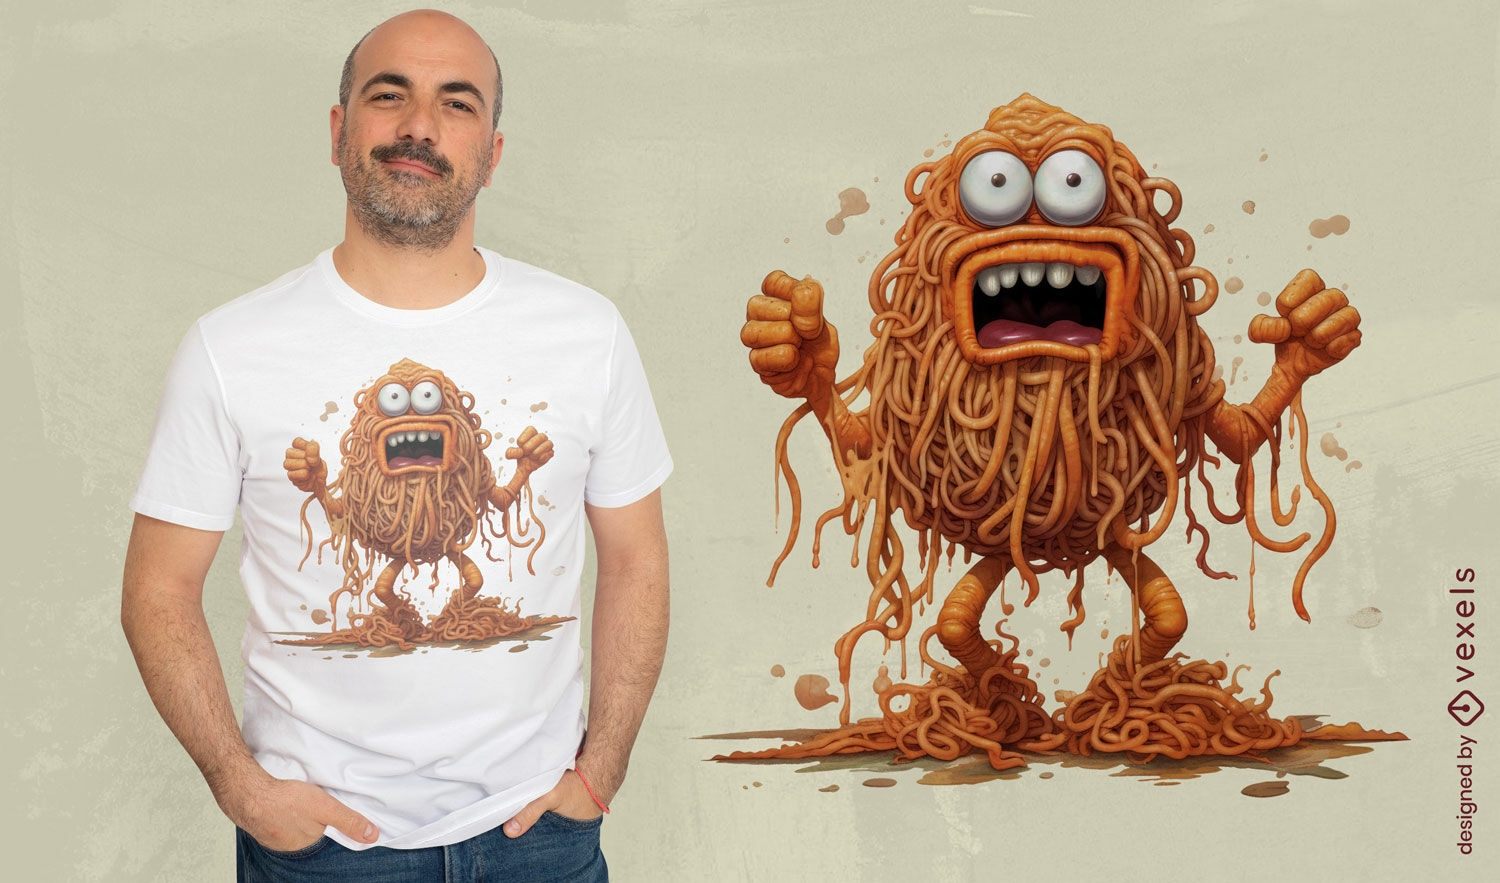 Dise?o de camiseta de dibujos animados de monstruo de espagueti.